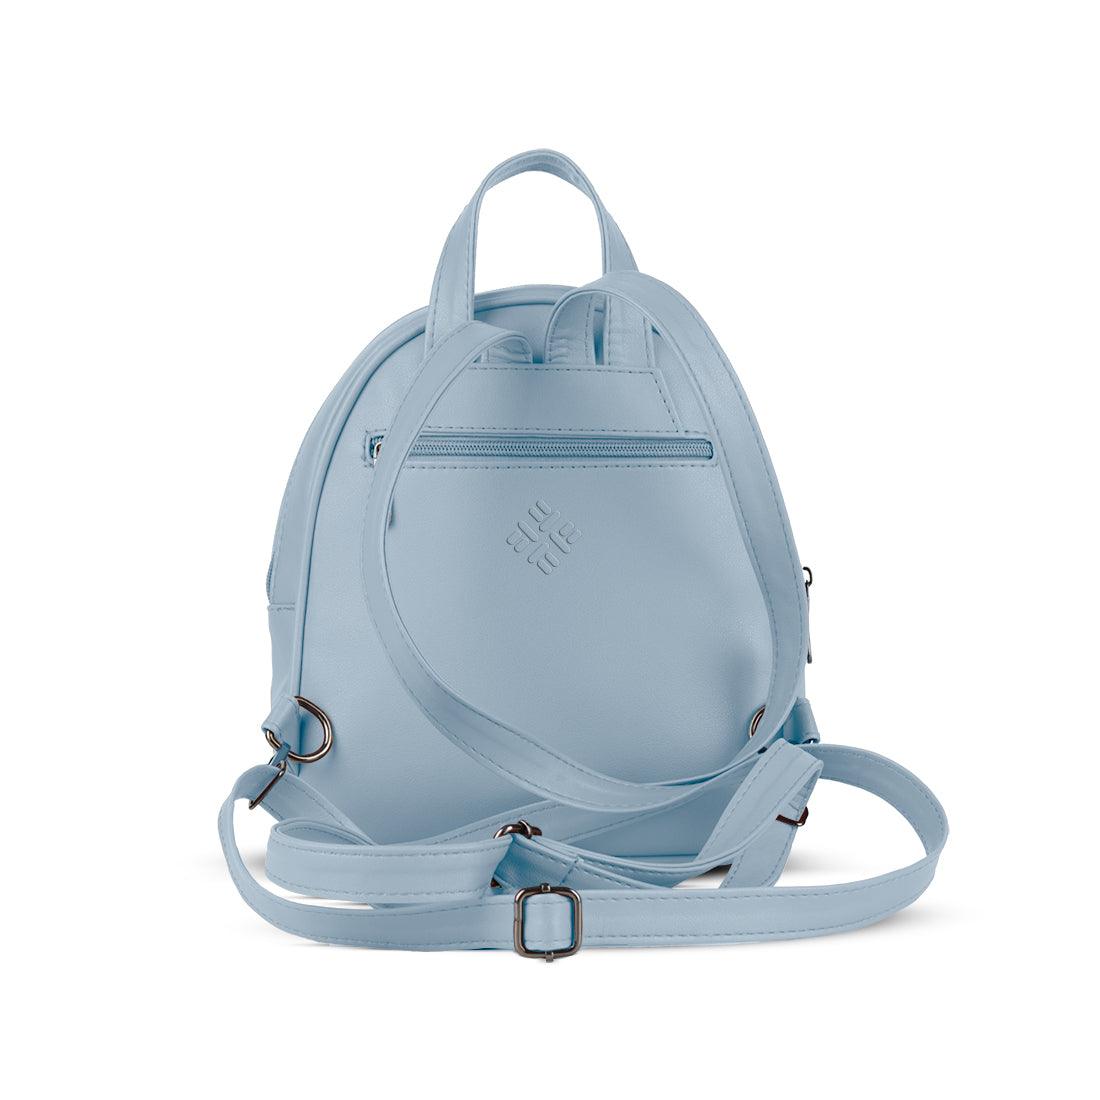 Blue O Mini Backpacks White Floral - CANVAEGYPT